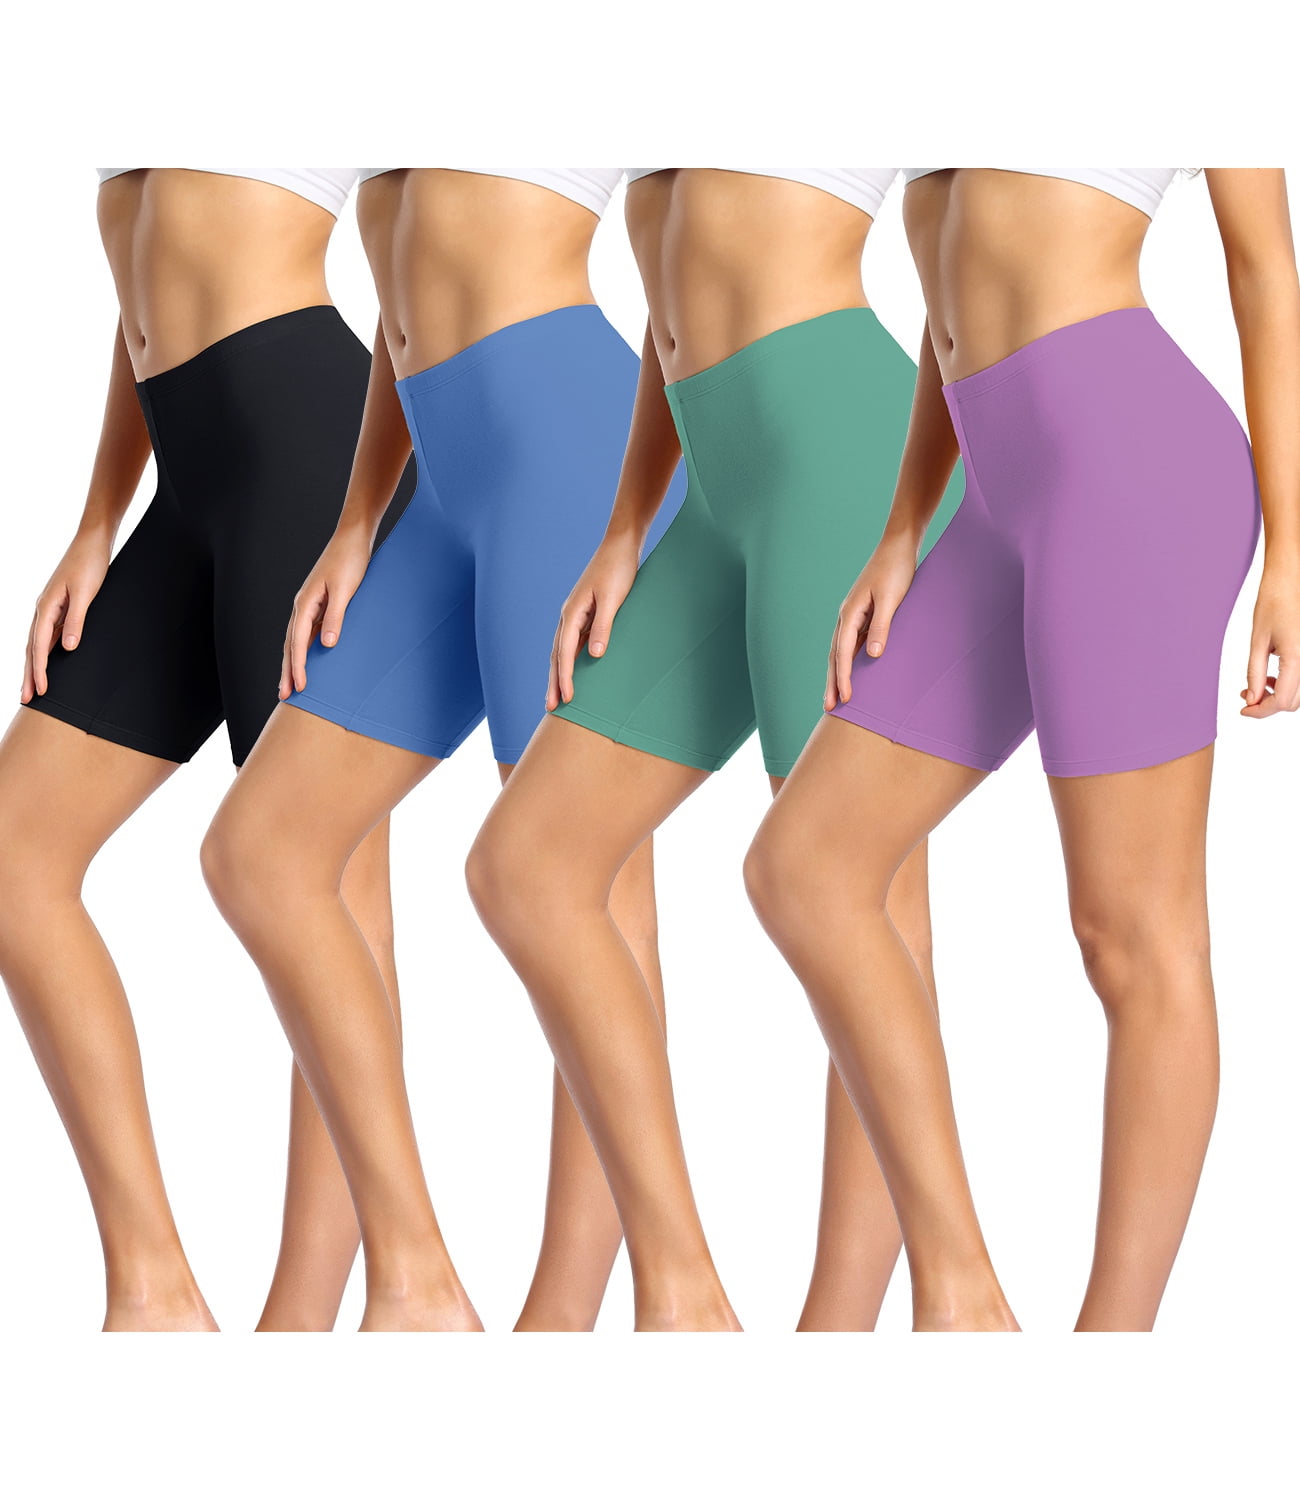 wirarpa Women's Cotton Boy Shorts Underwear Anti Chafing Soft Biker Short  Panties Multicolor Size 6 